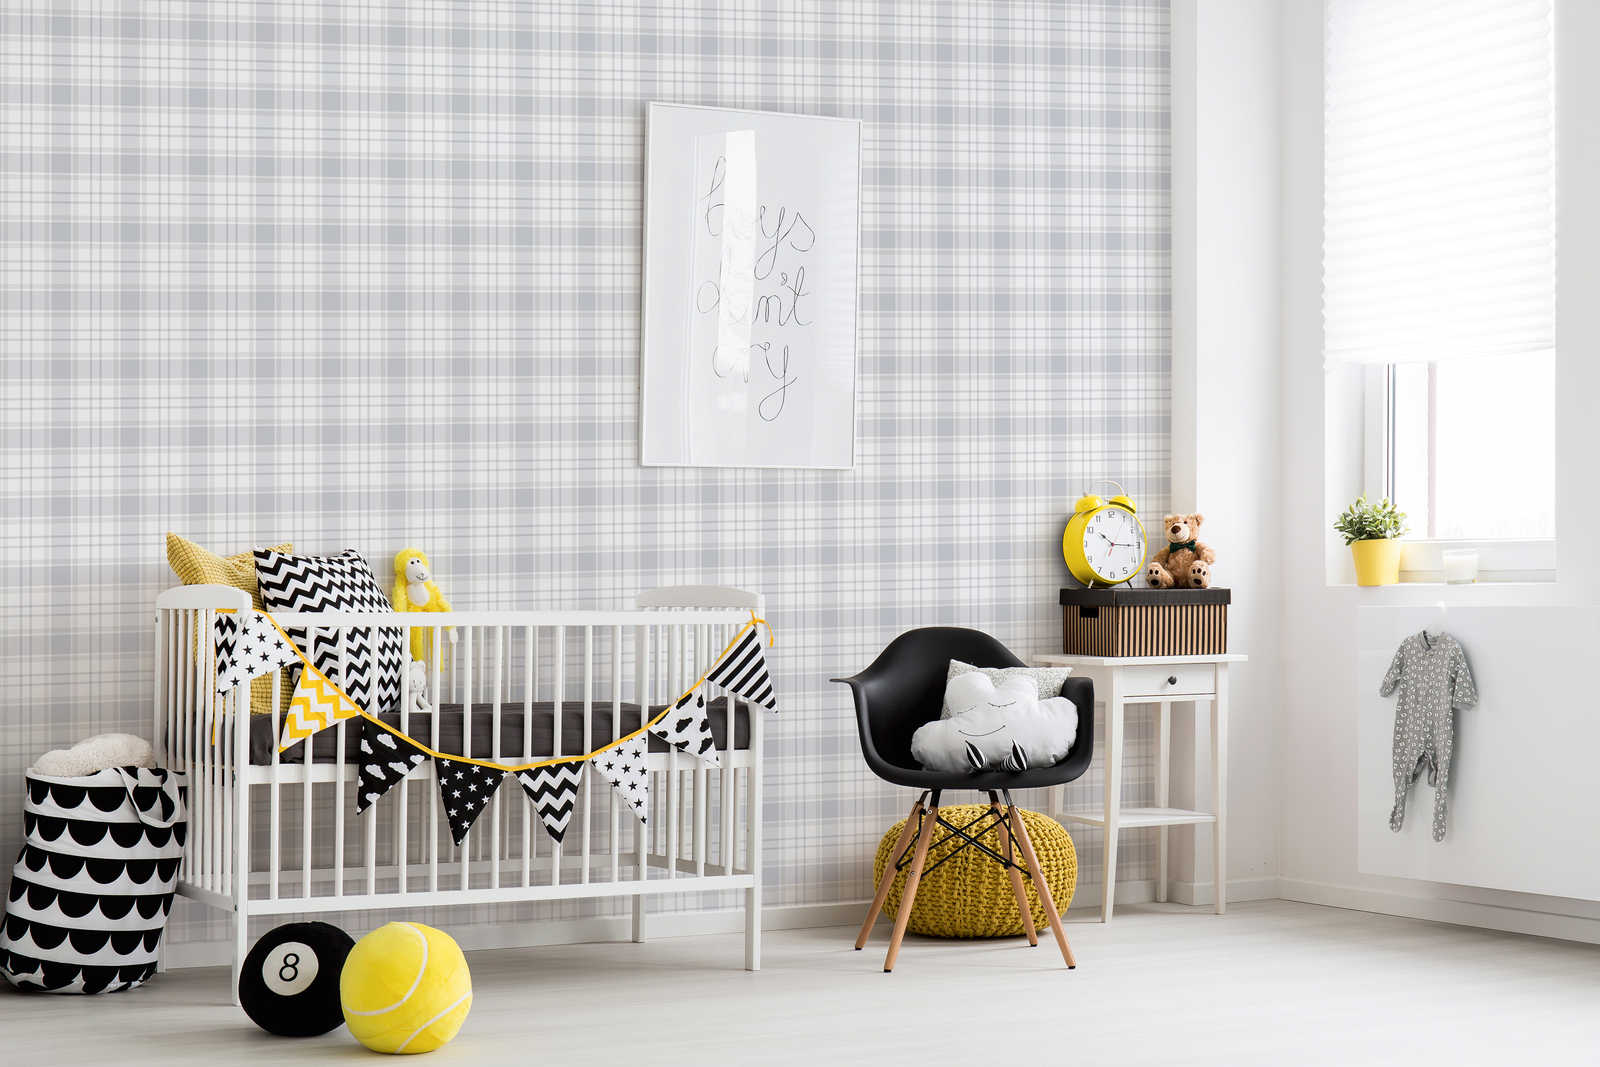             Tapete Kinderzimmer Tartan-Muster – Beige, Grau, Weiß
        